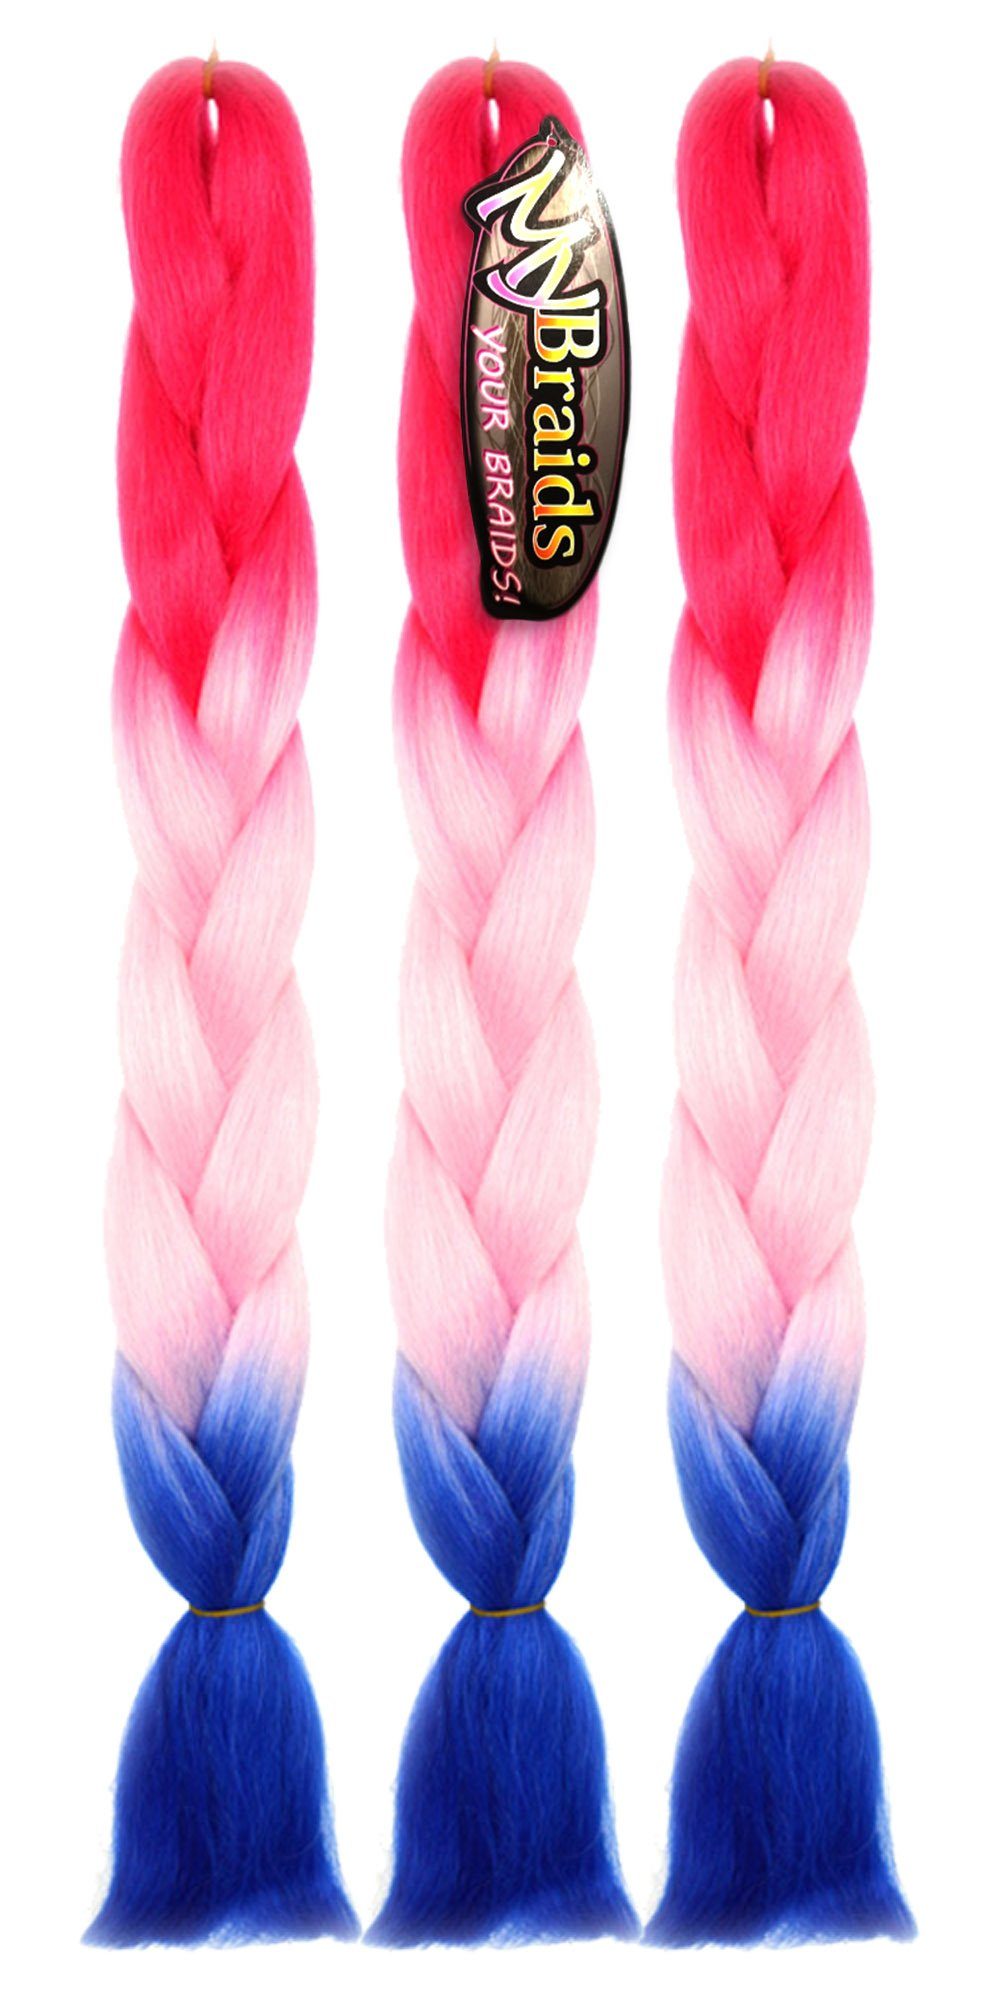 23-CY Pink-Hellrosa-Dunkelblau Zöpfe Pack YOUR MyBraids im 3er 3-farbig Kunsthaar-Extension Jumbo Braids Flechthaar BRAIDS!